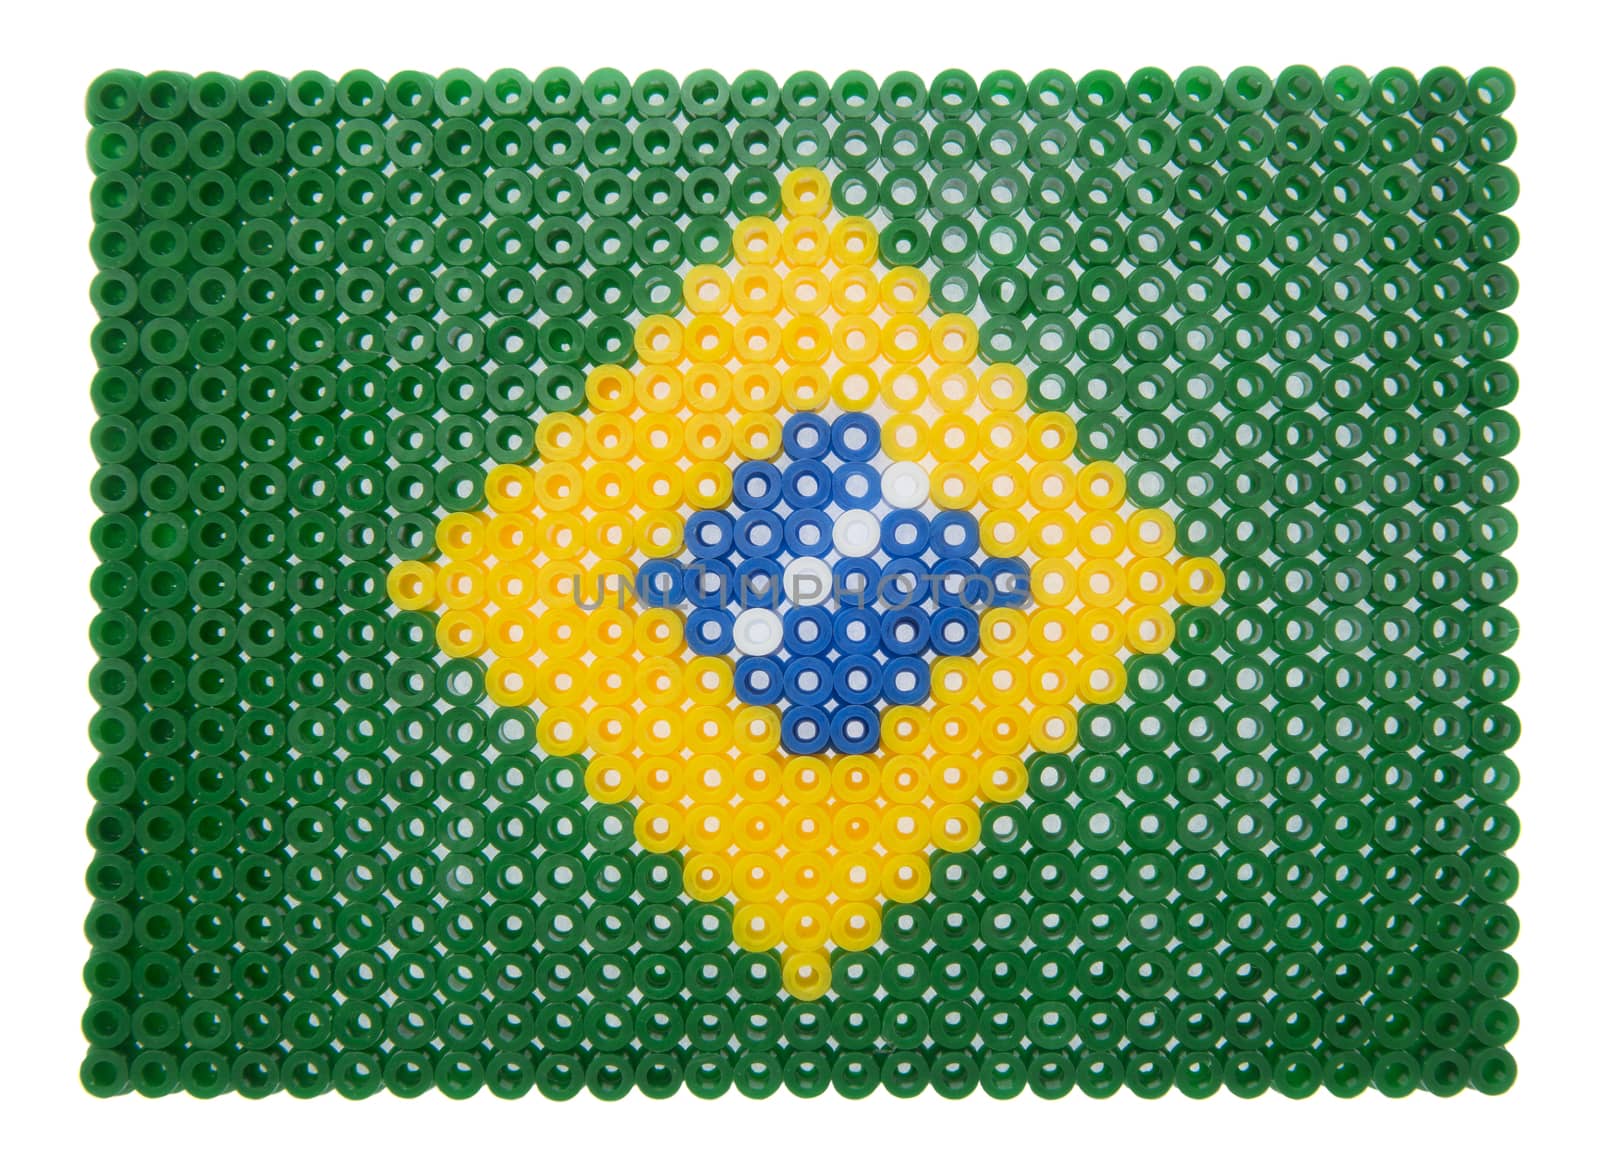 Brazilian Flag by gemenacom